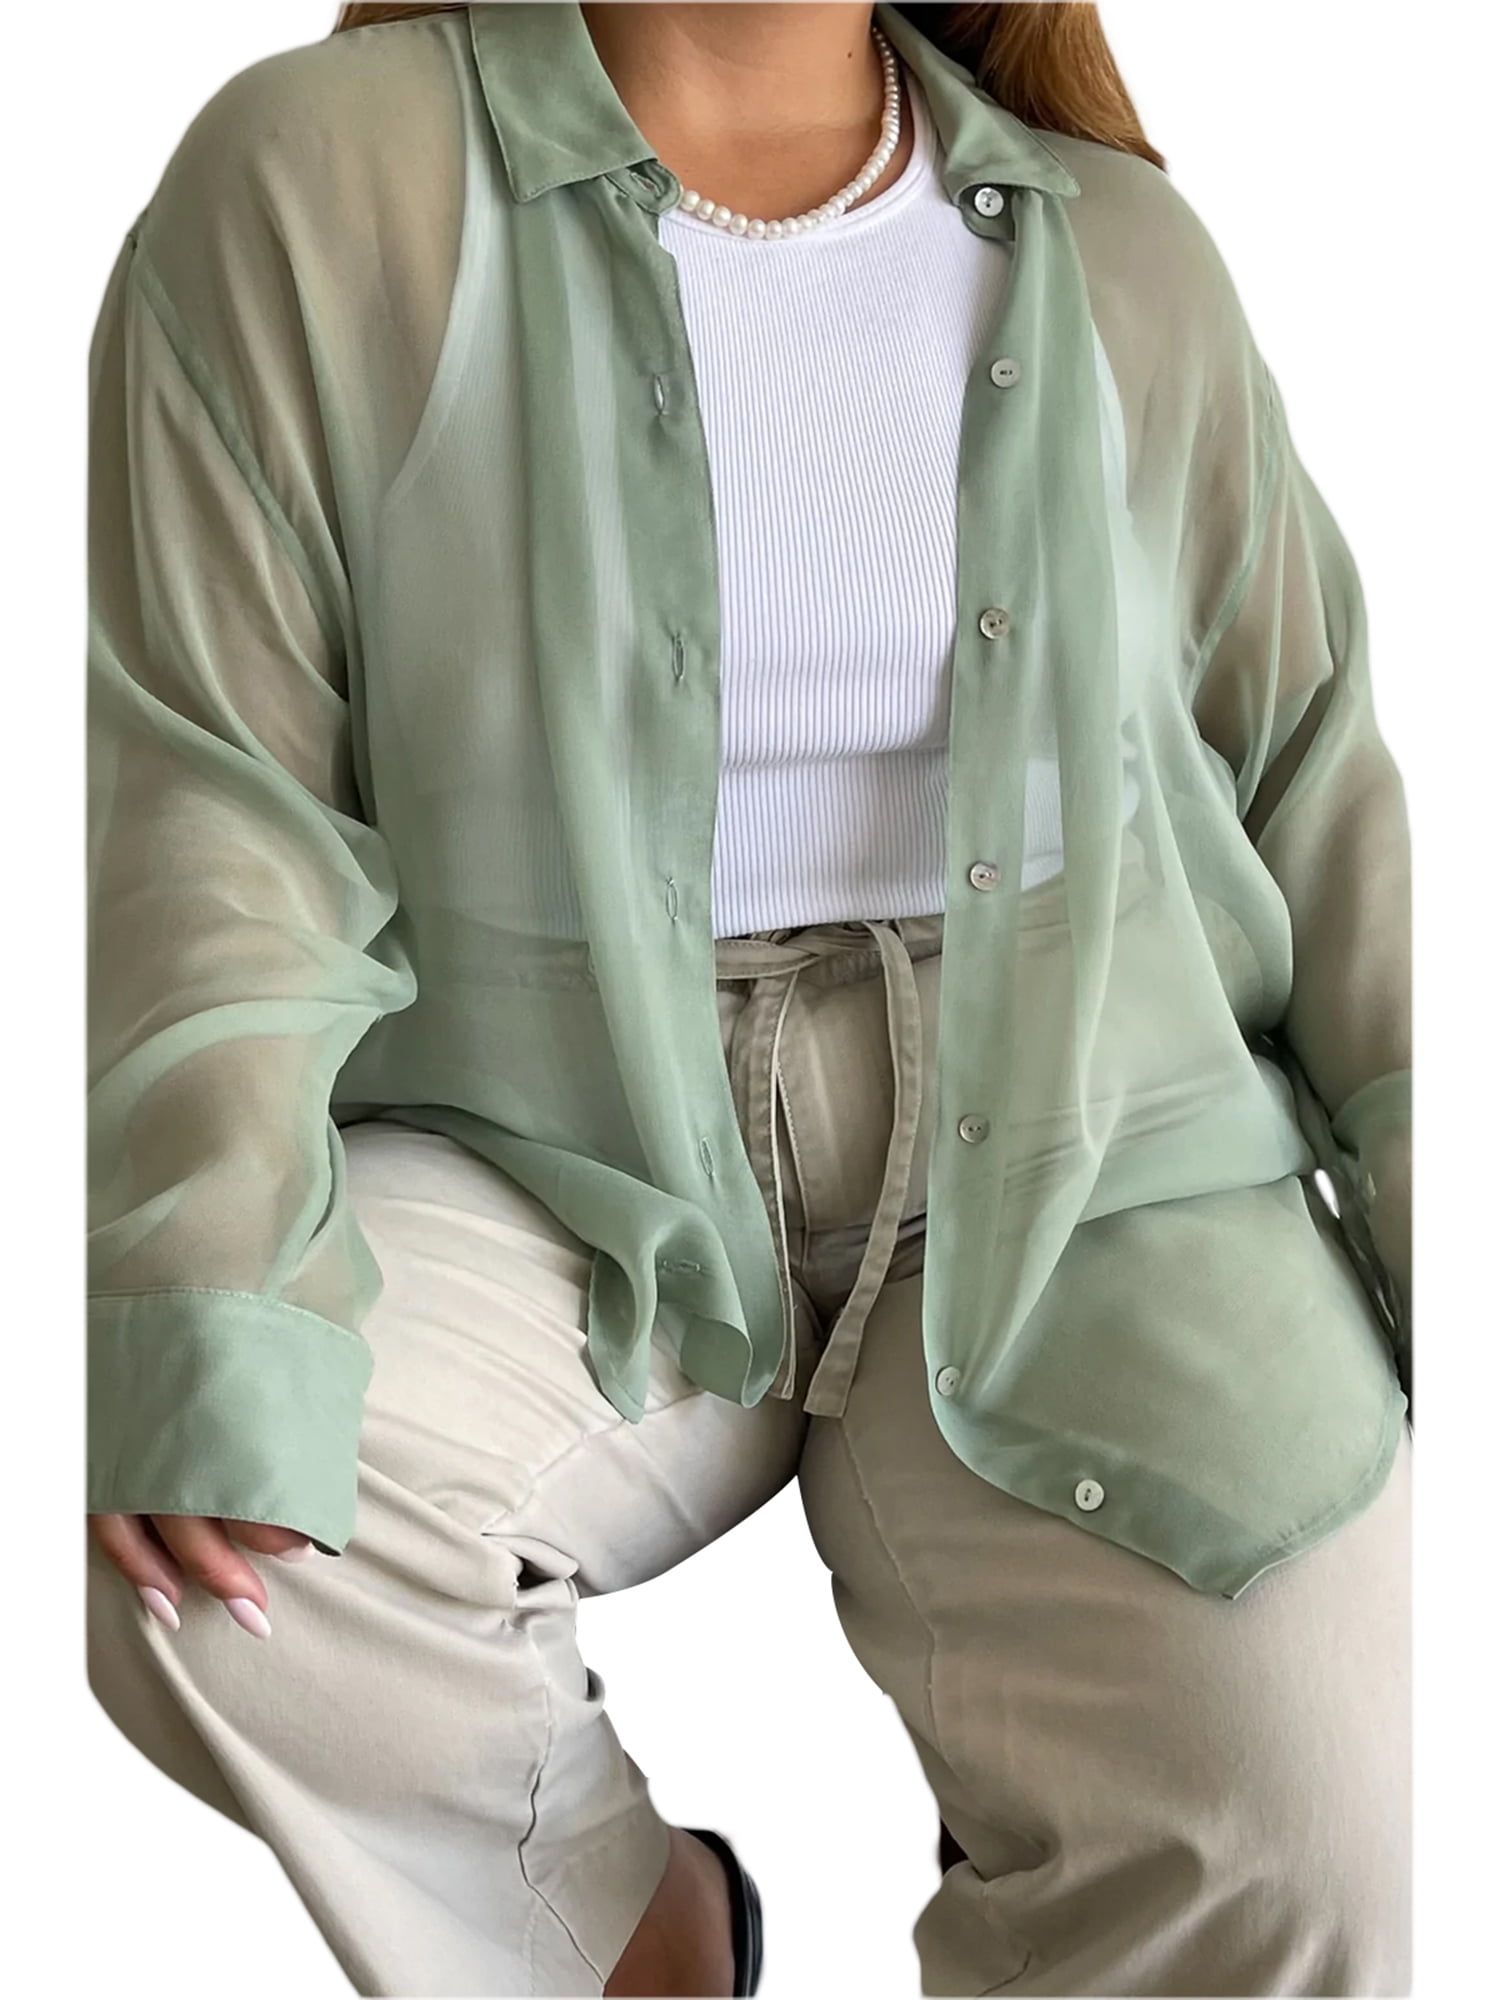 wybzd Women Sheer Mesh See Through Lapel Button Down Shirt Long Sleeve  Spring Autumn Blouse Tops Green S 